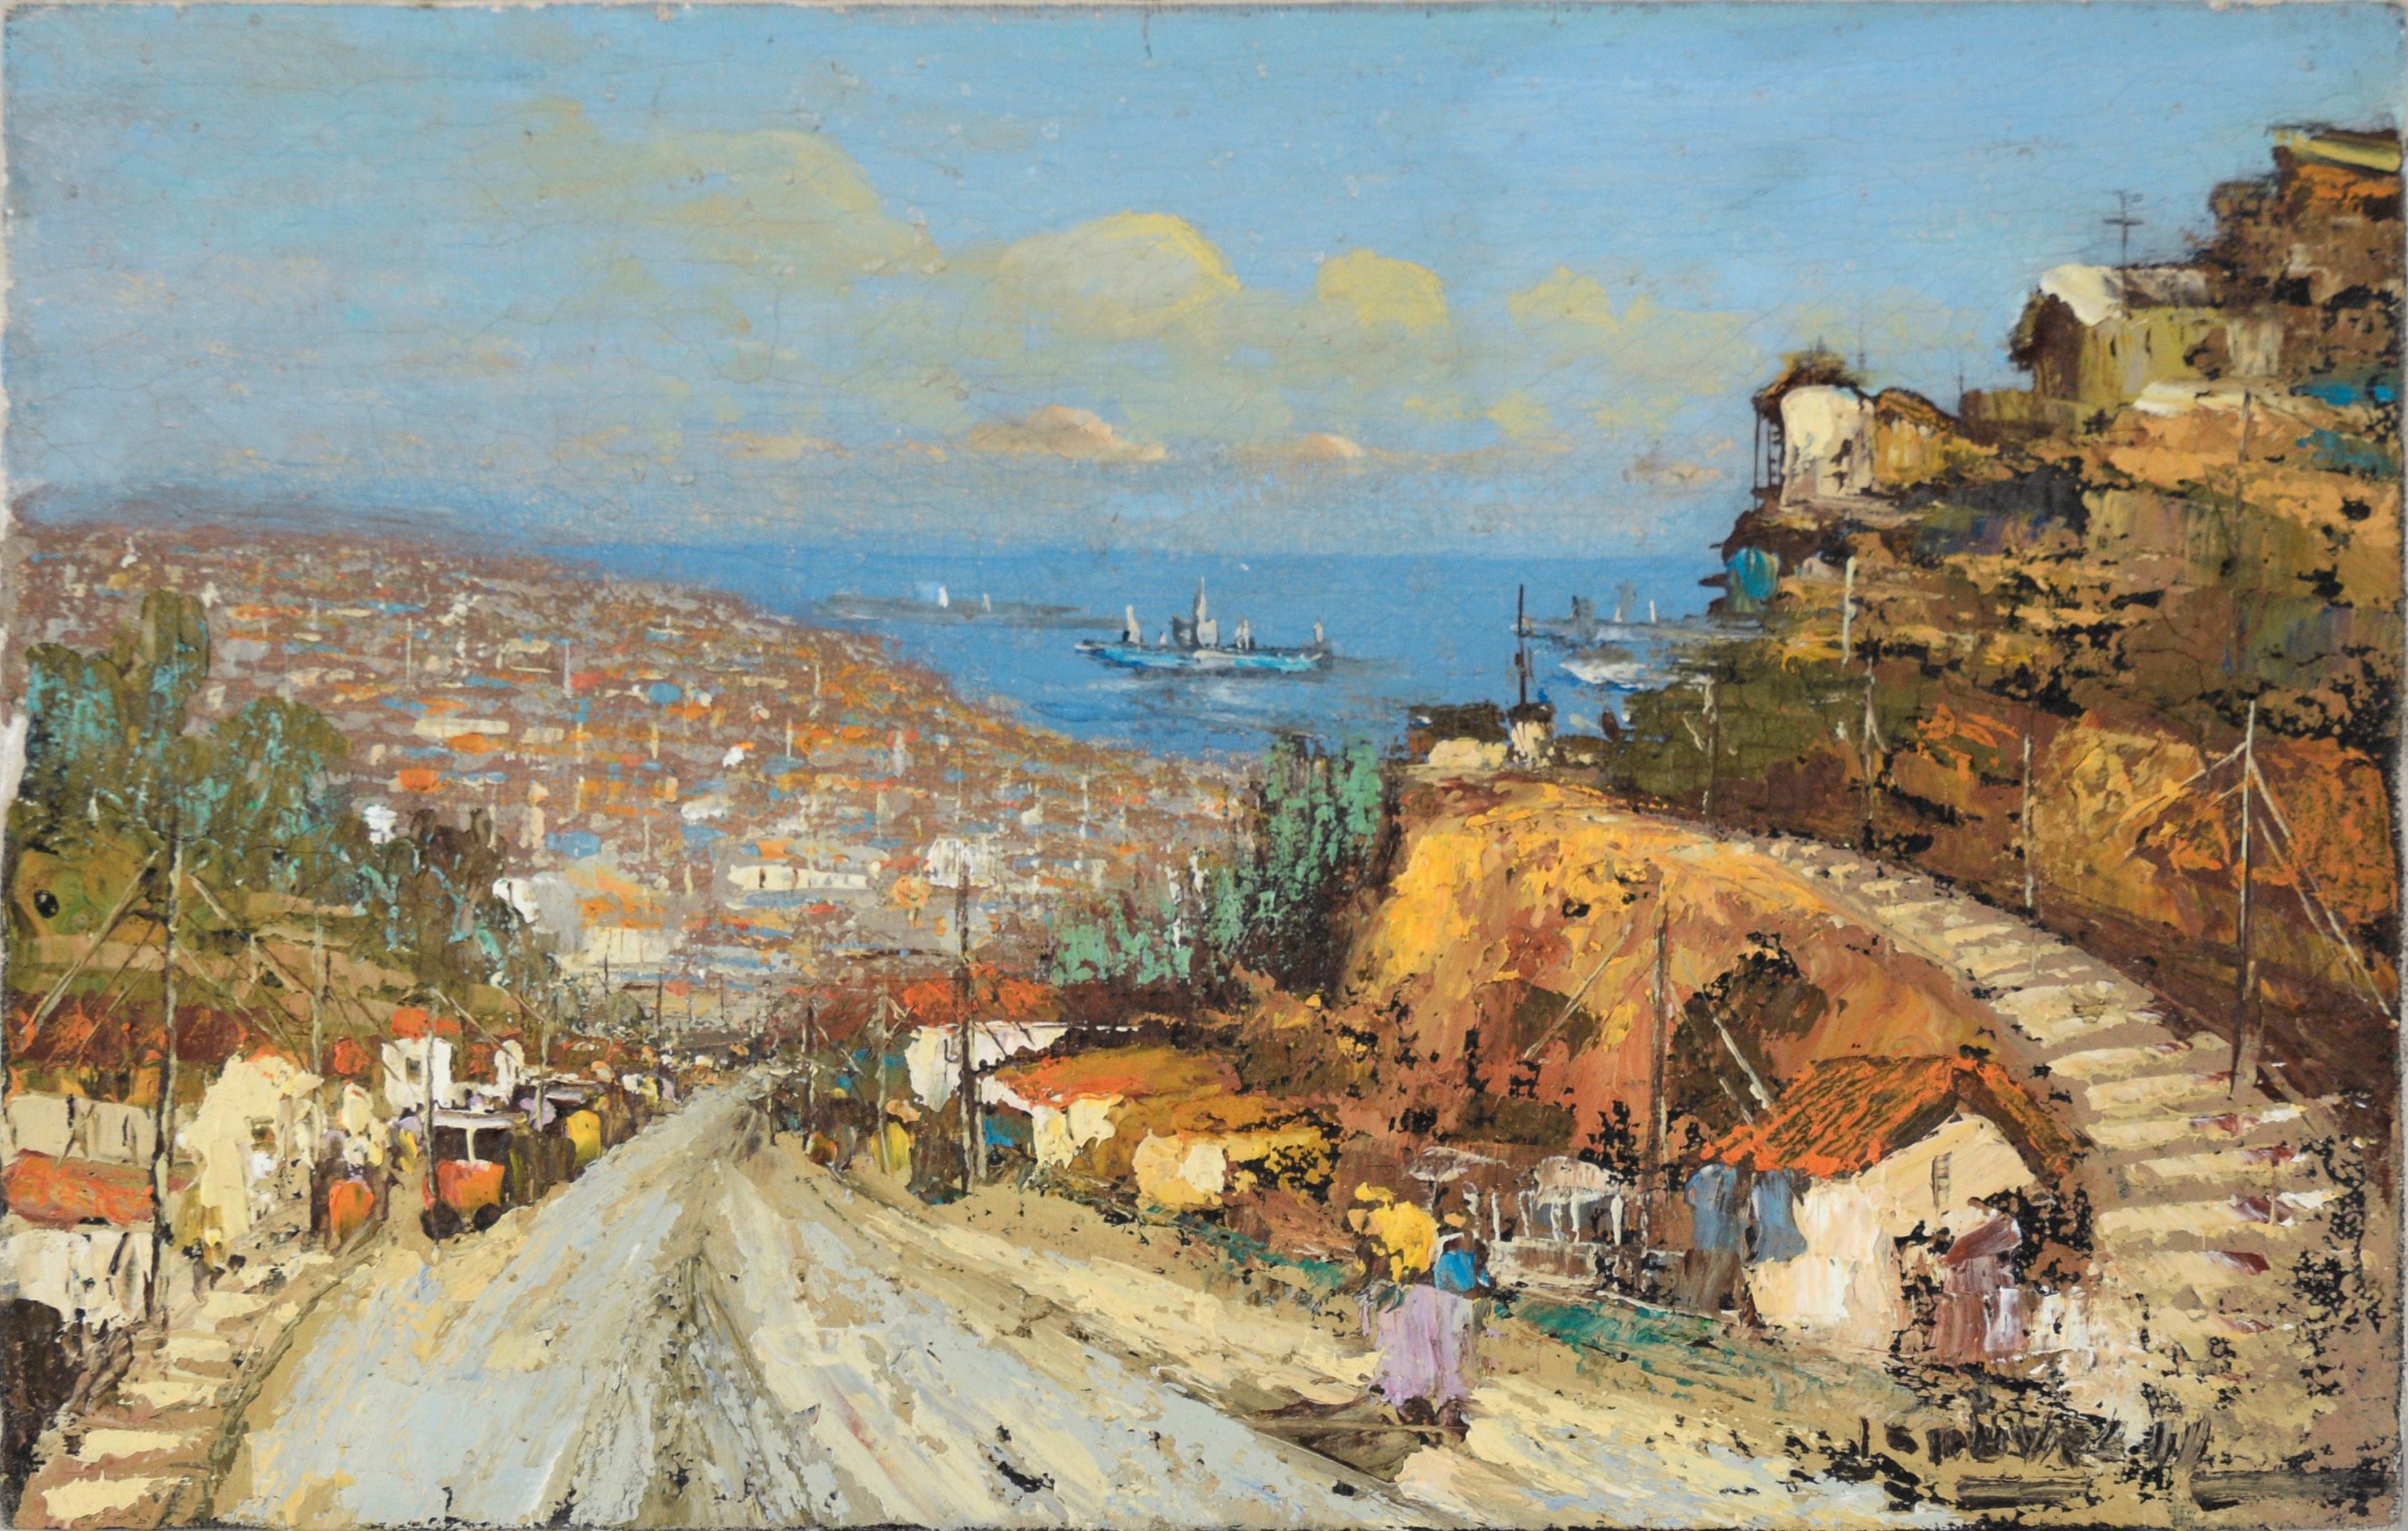 Jorge Chaves Landscape Painting - "La Entrade Vieja a Valparaiso" - Chilean Coastal Cityscape in Oil on Canvas